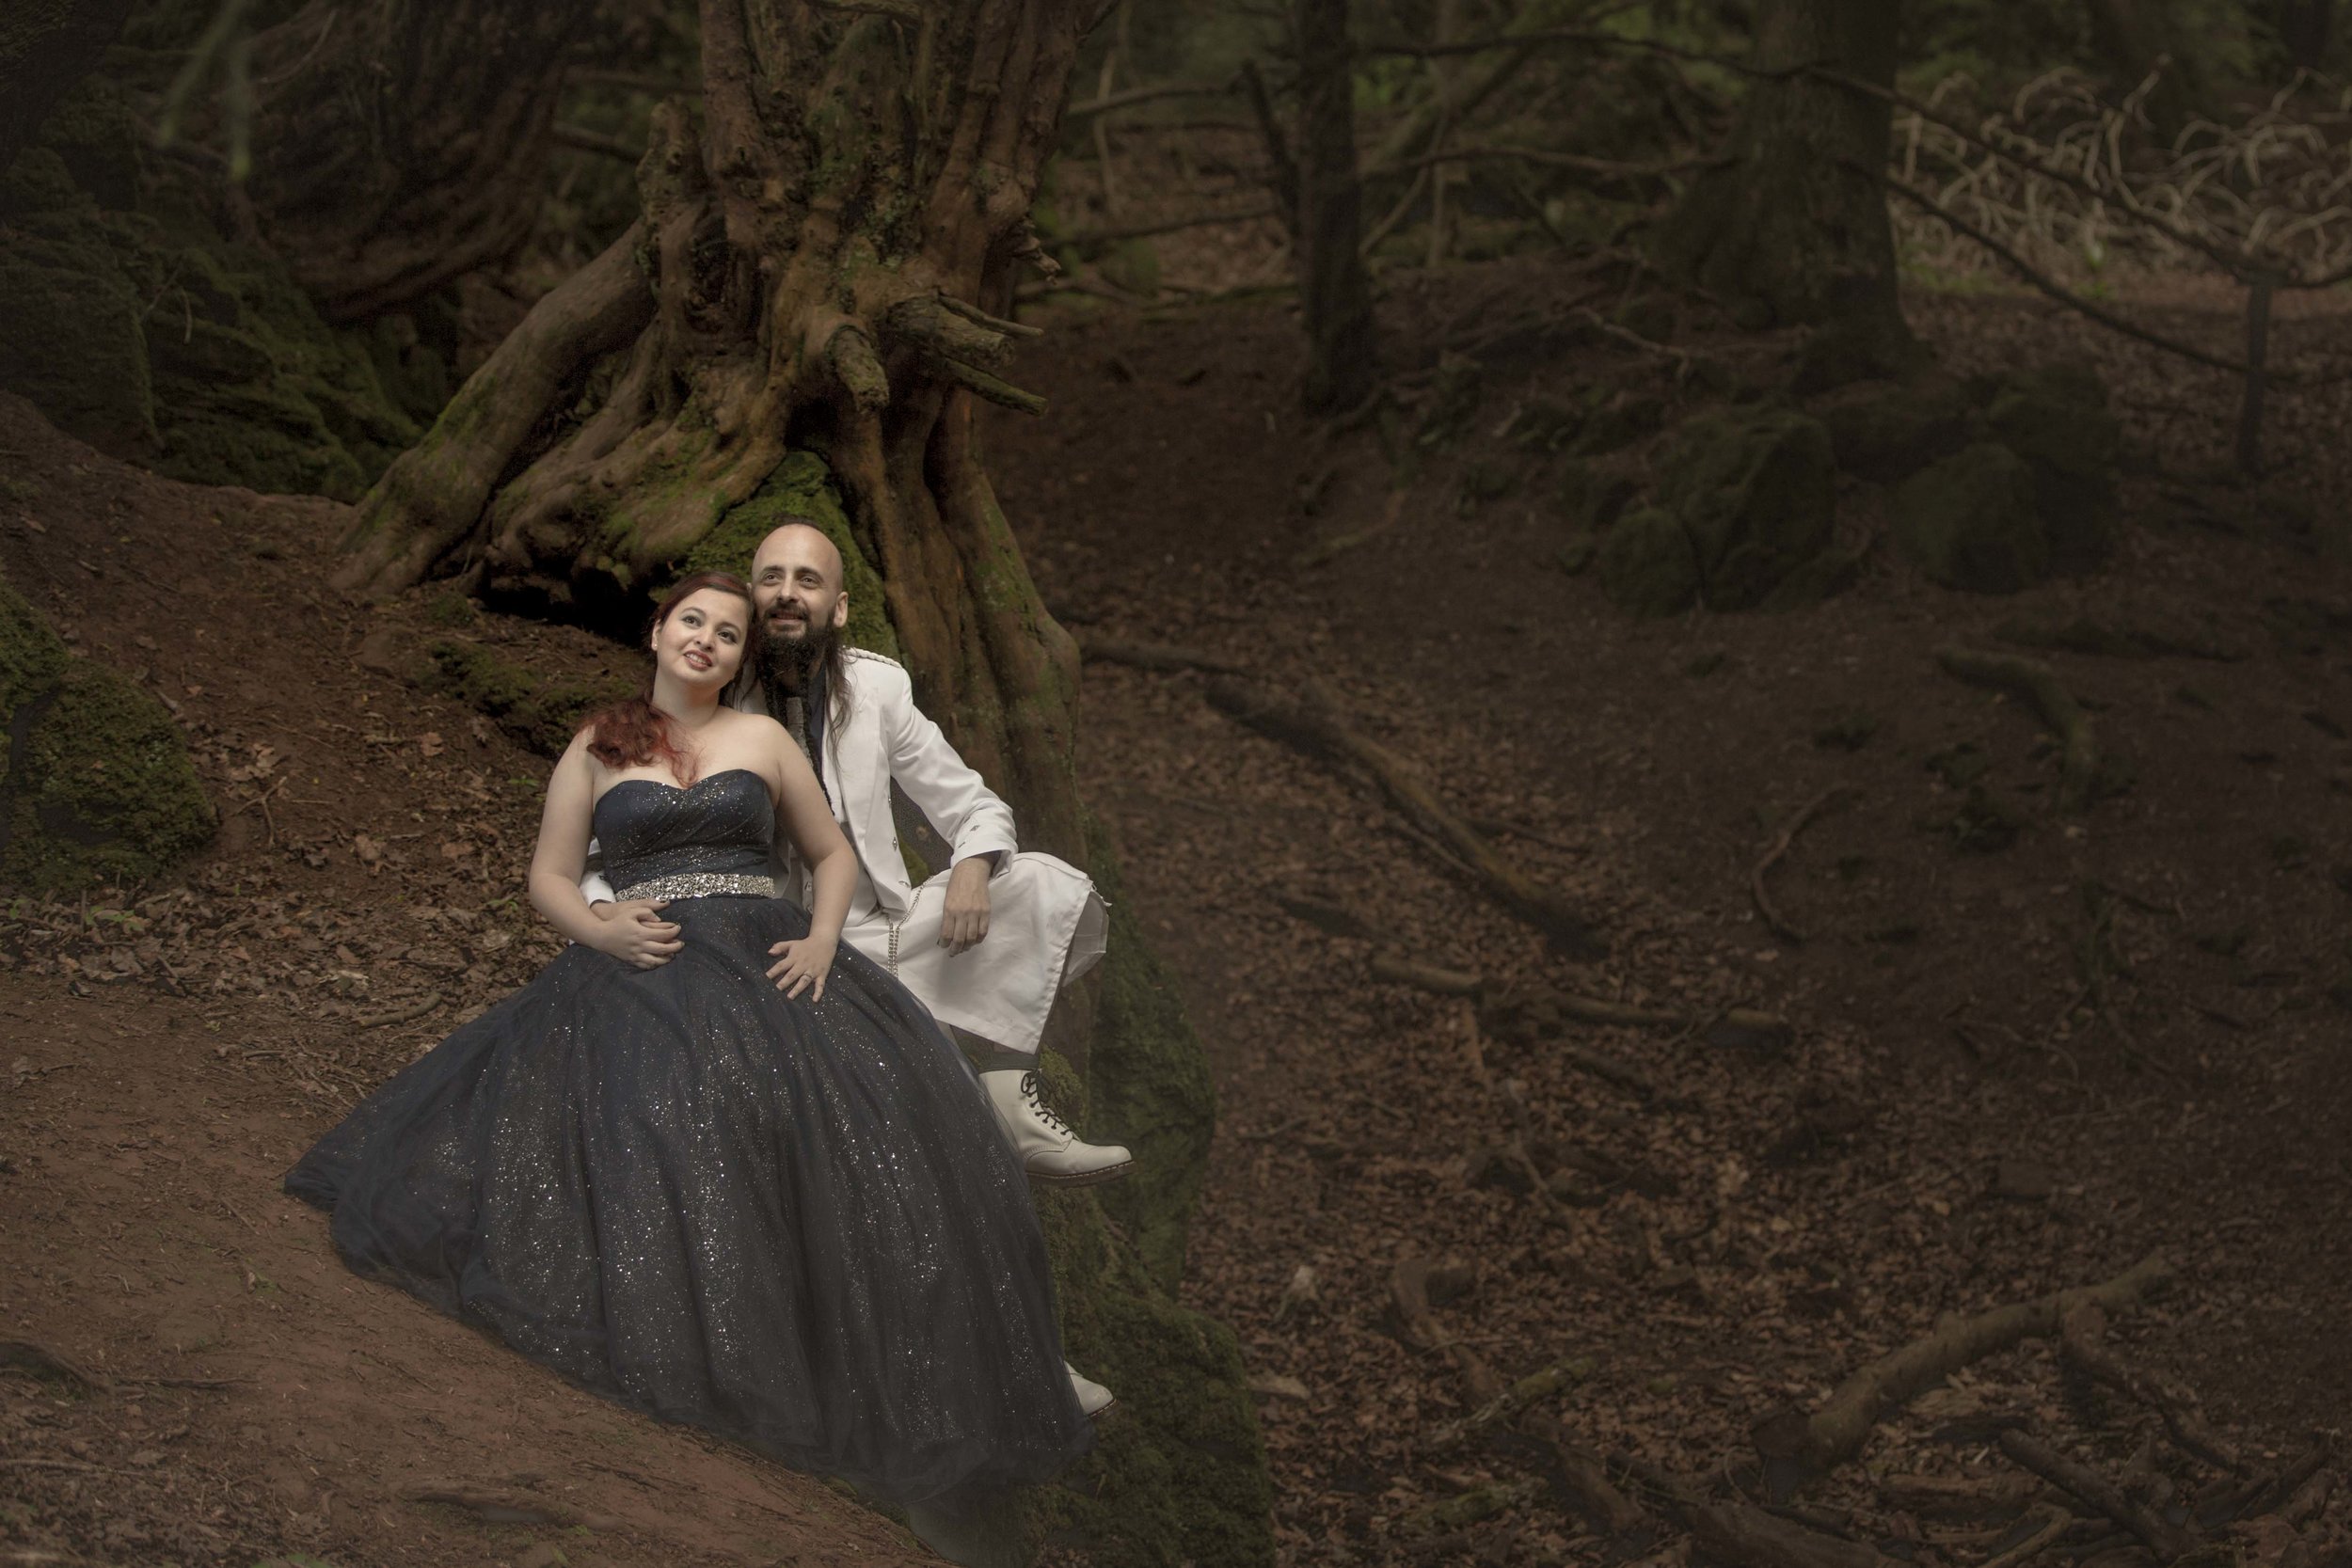 Puzzlewood-fairytale-fairy-forest-wood-prewedding-photoshoot-star-wars-couple-shoot-asian-wedding-photographer-natalia-smith-photography-10.jpg